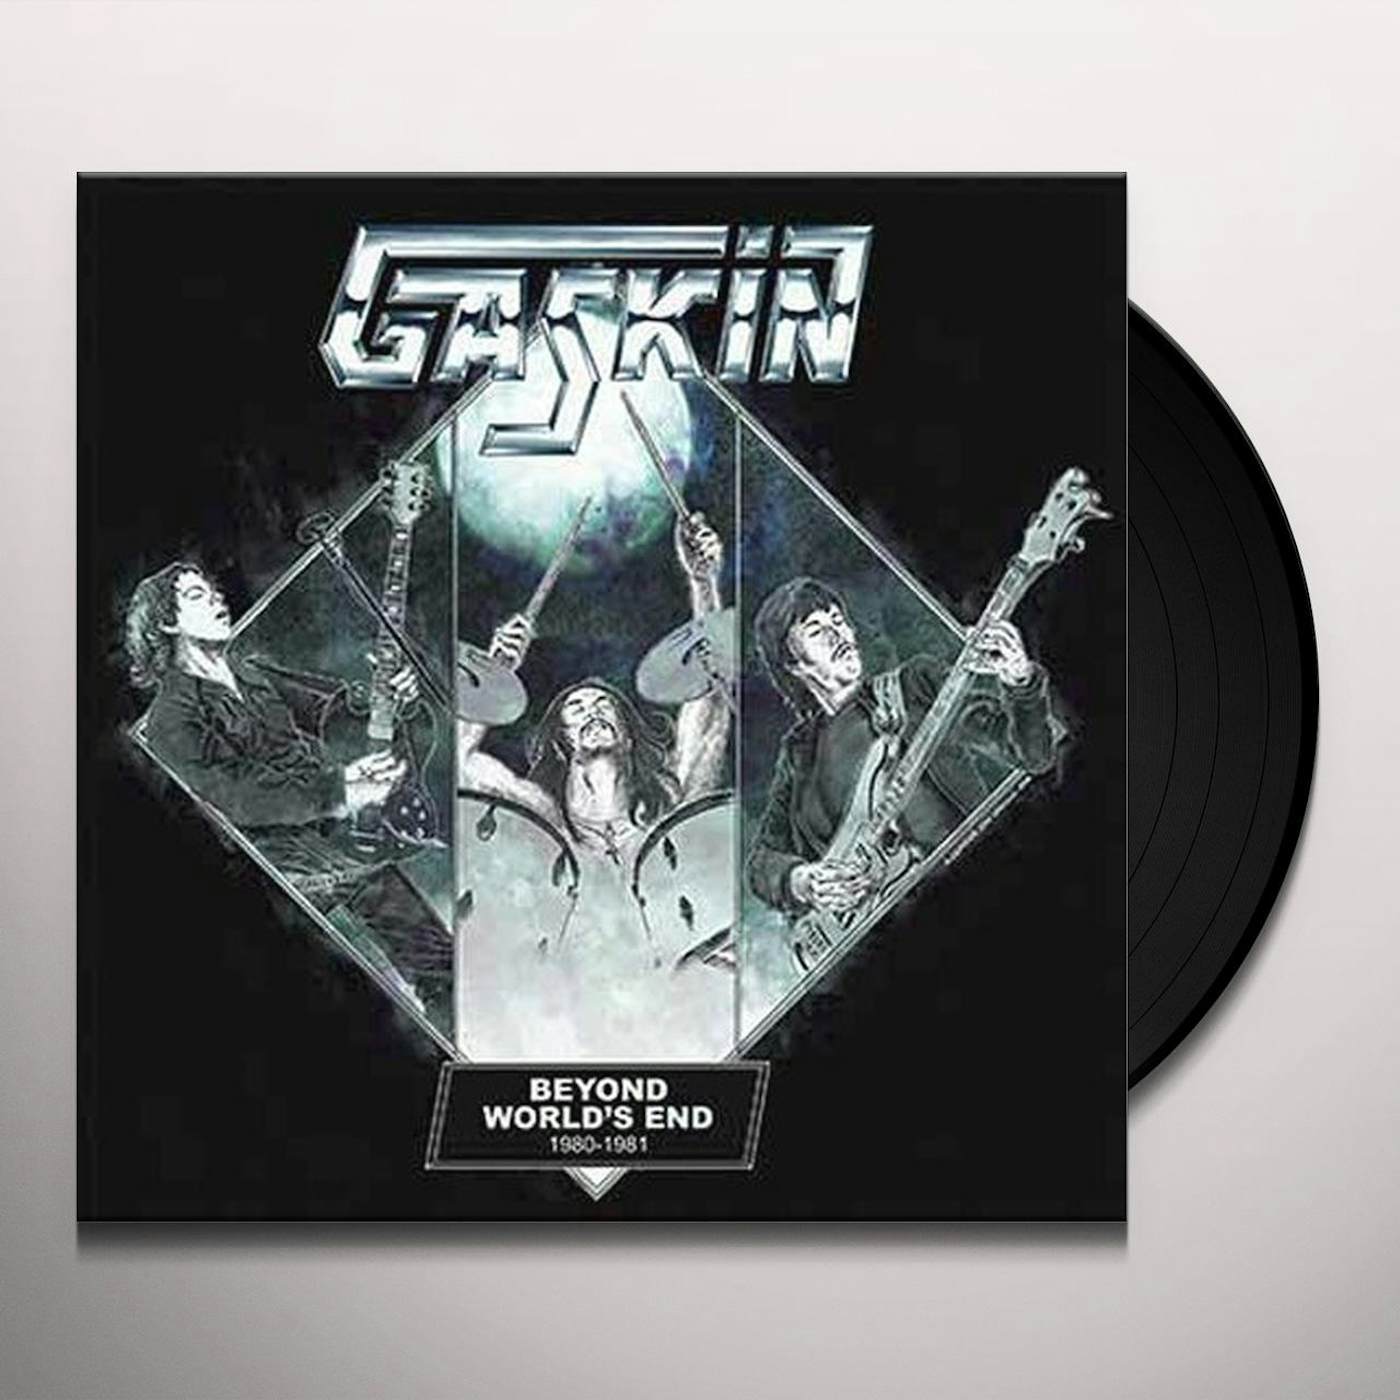 Gaskin BEYOND WORLD'S END Vinyl Record